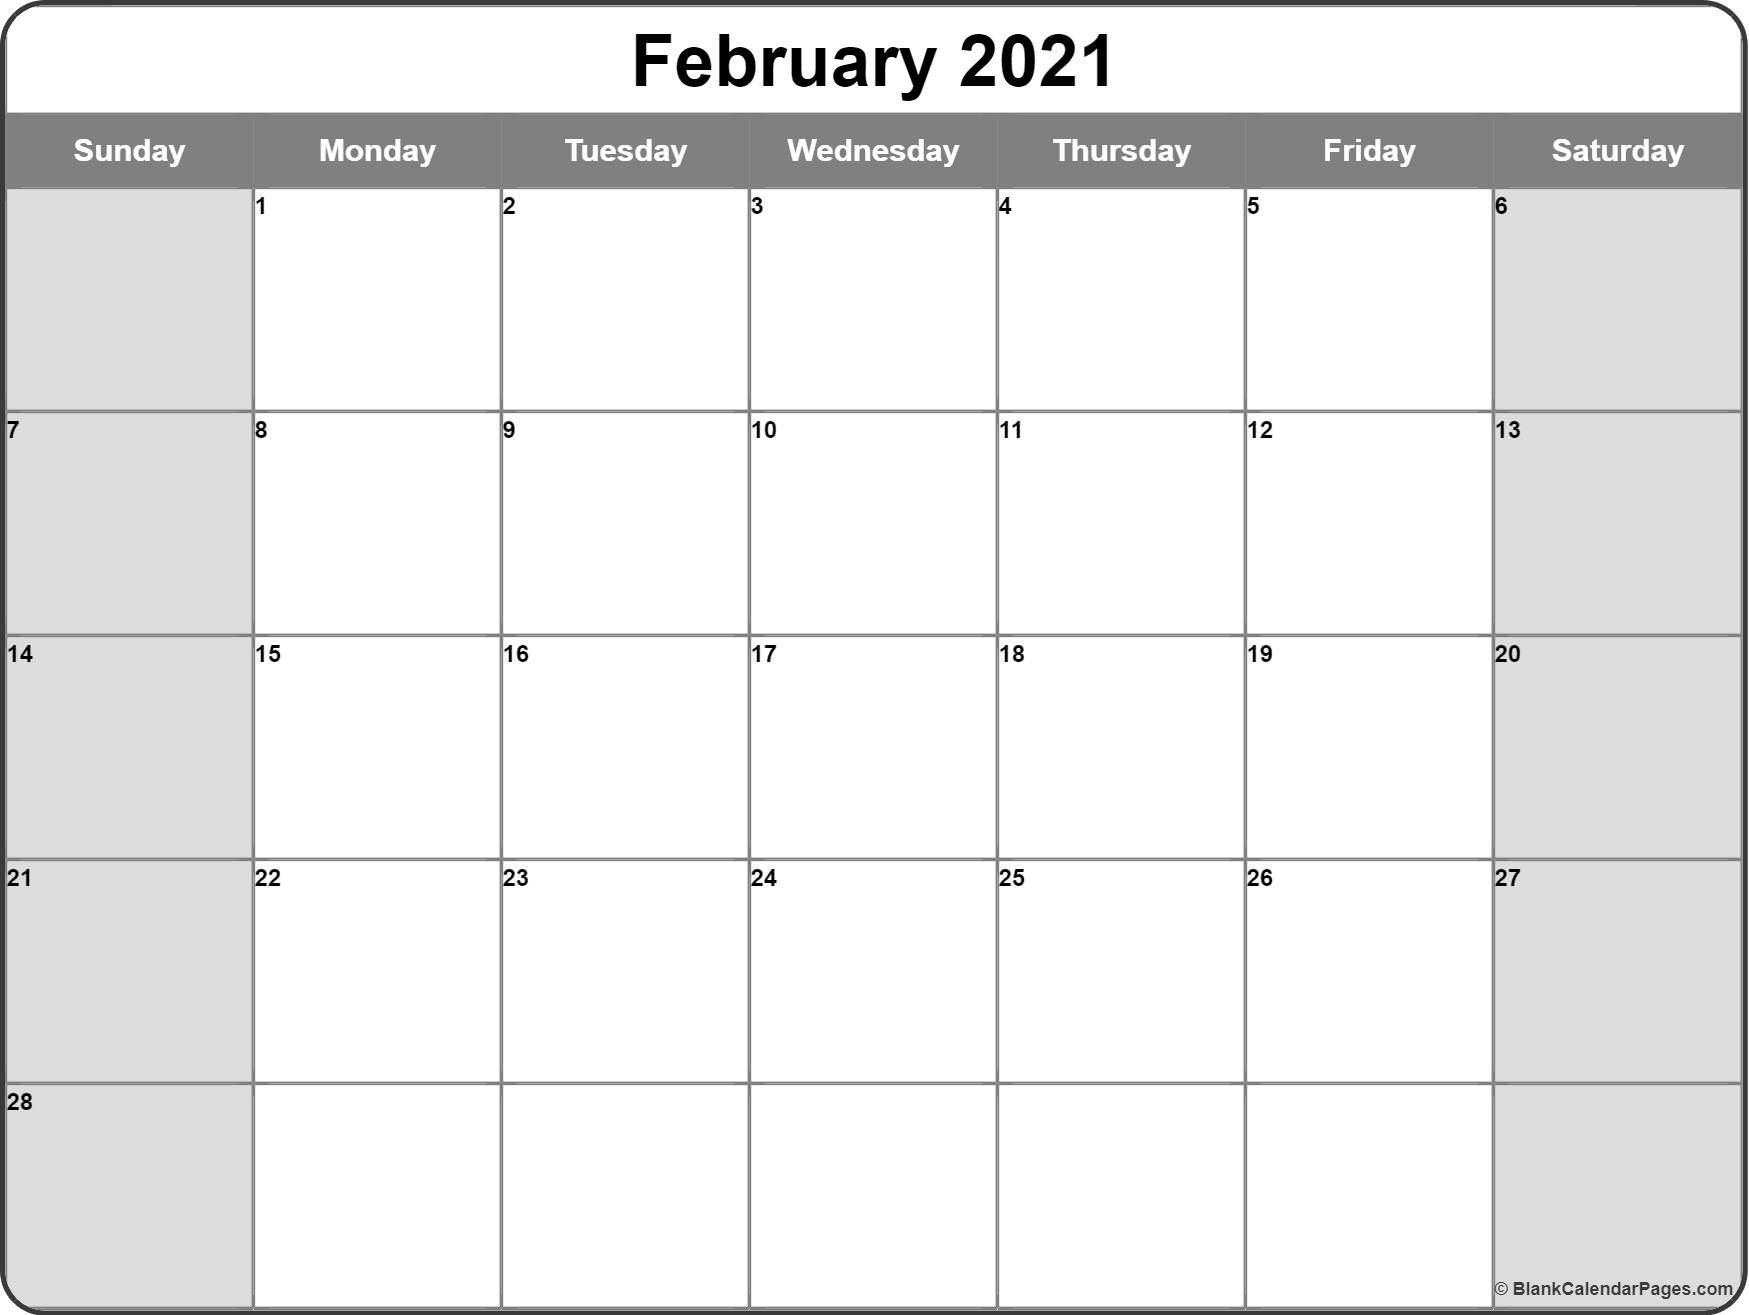 Blank February 2021 Calendar Page In 2020 | Calendar